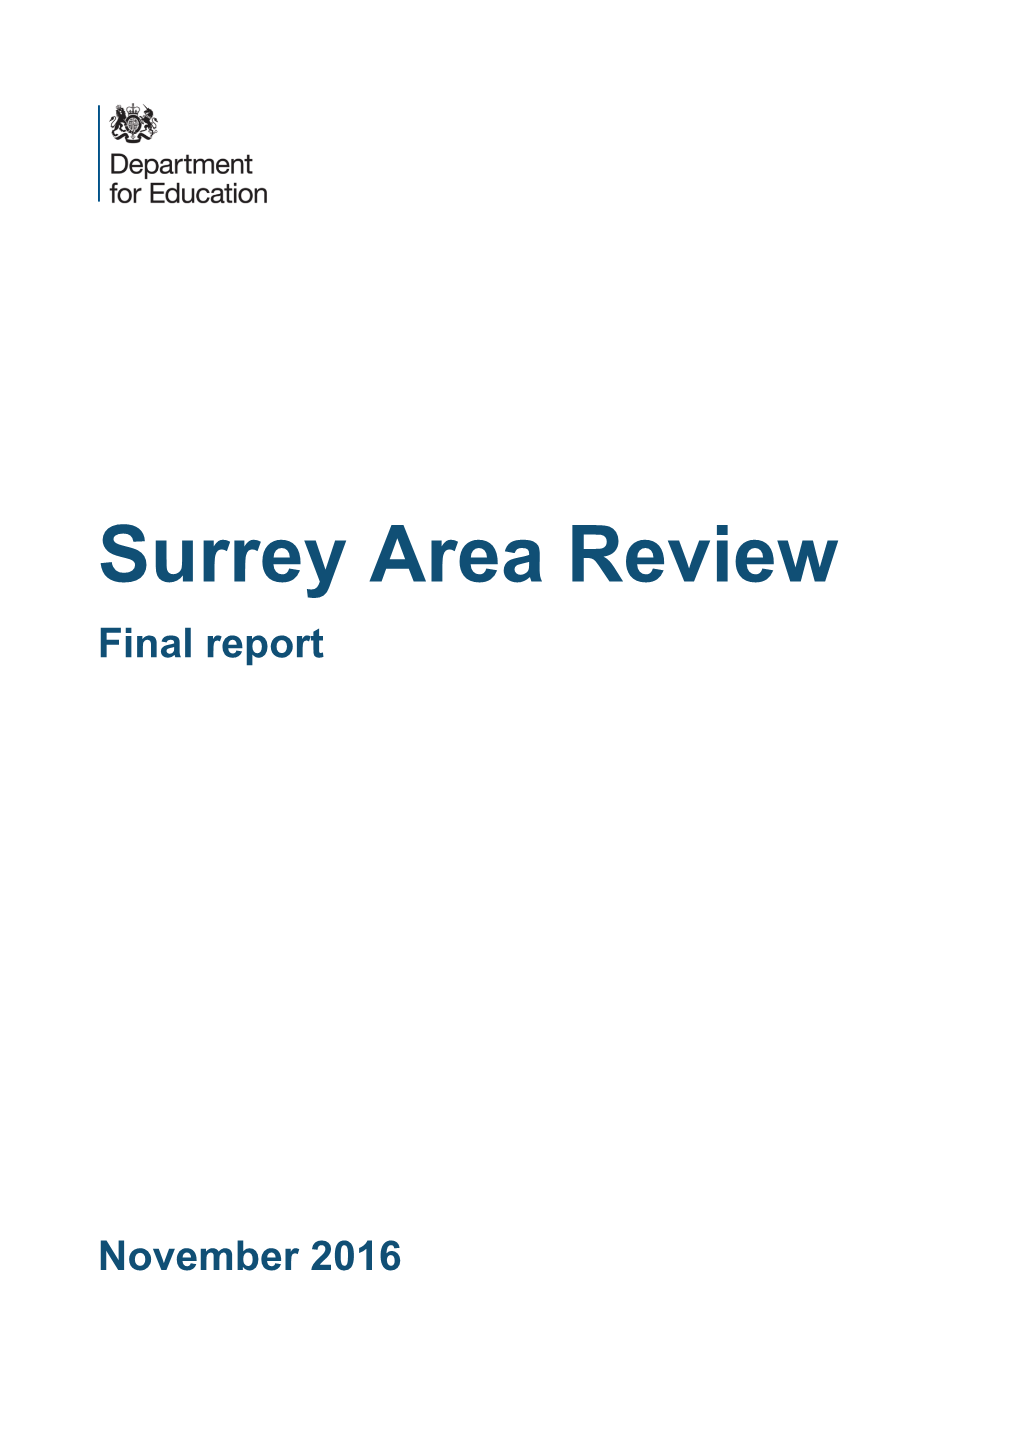 Surrey Area Review Final Report